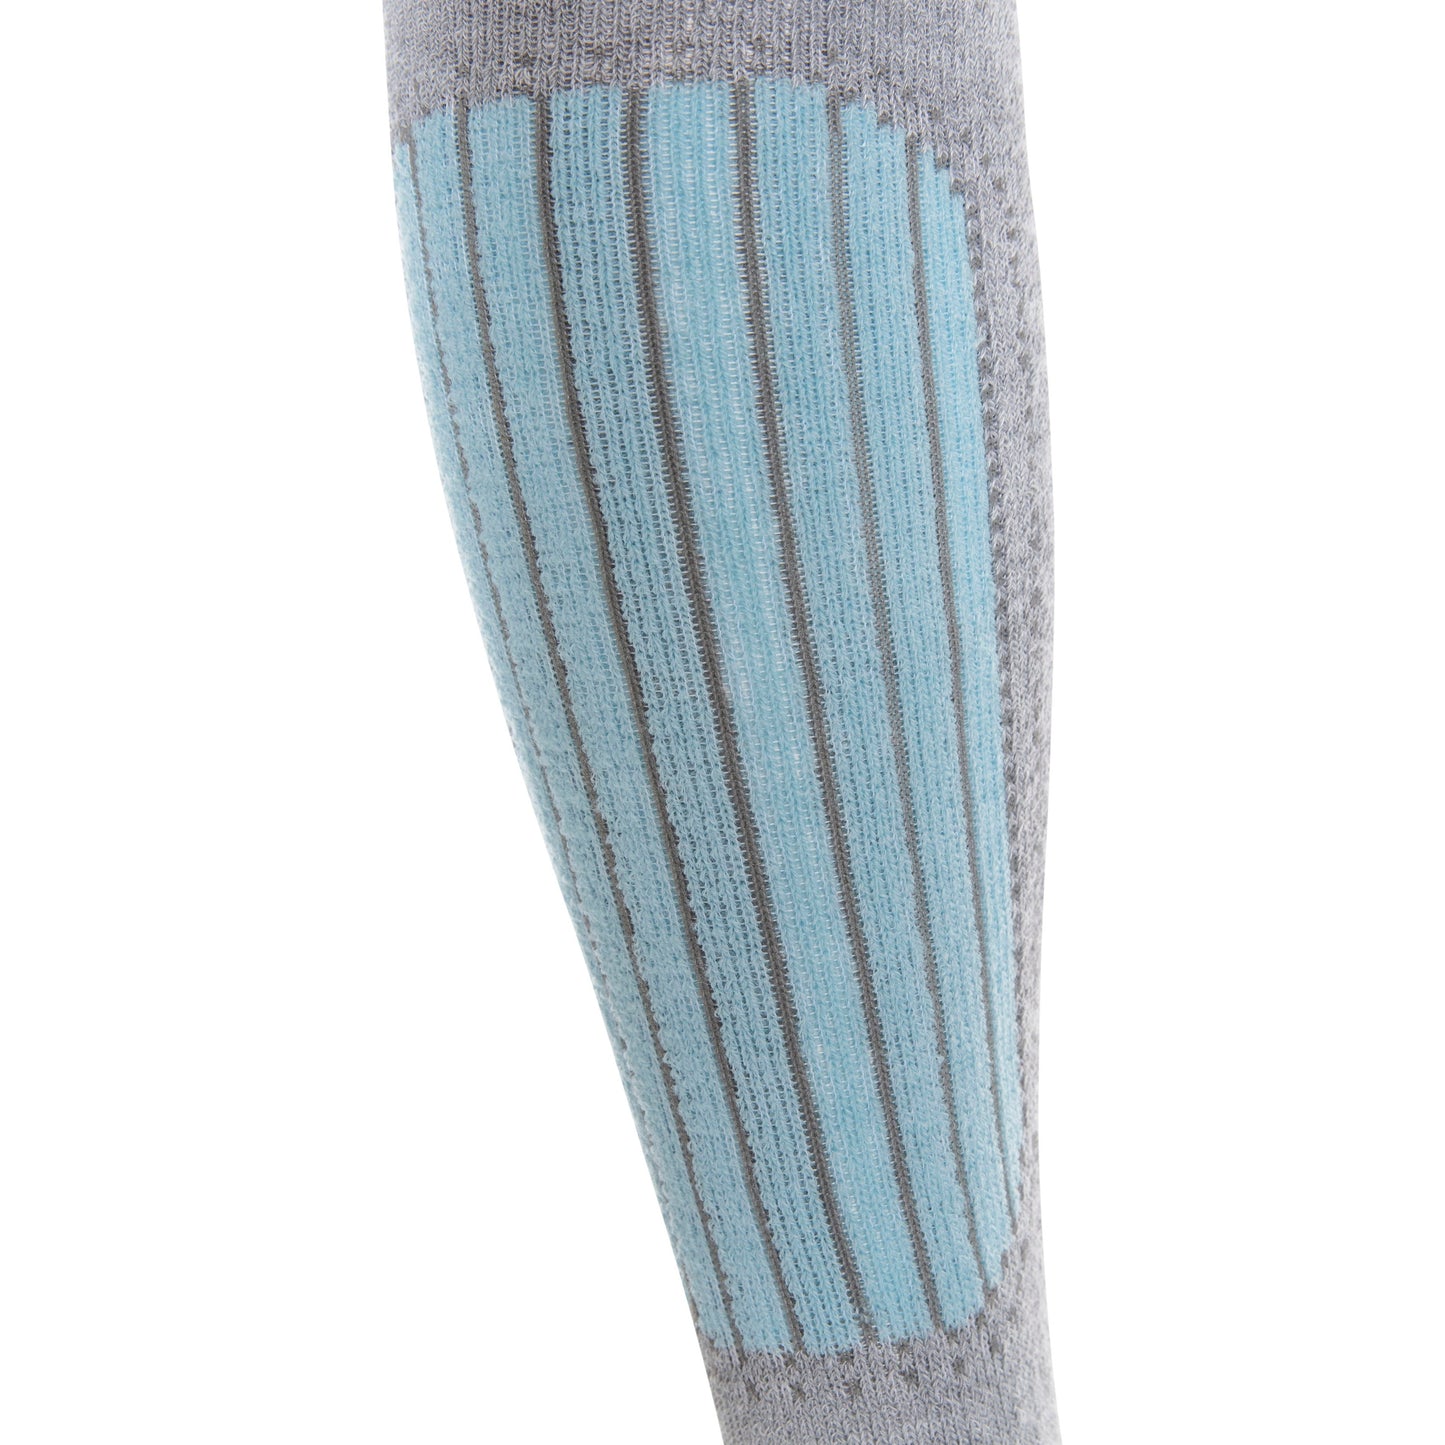 Janus 2 - Women's Ski Socks - 2 Pack - Mist / Aqua